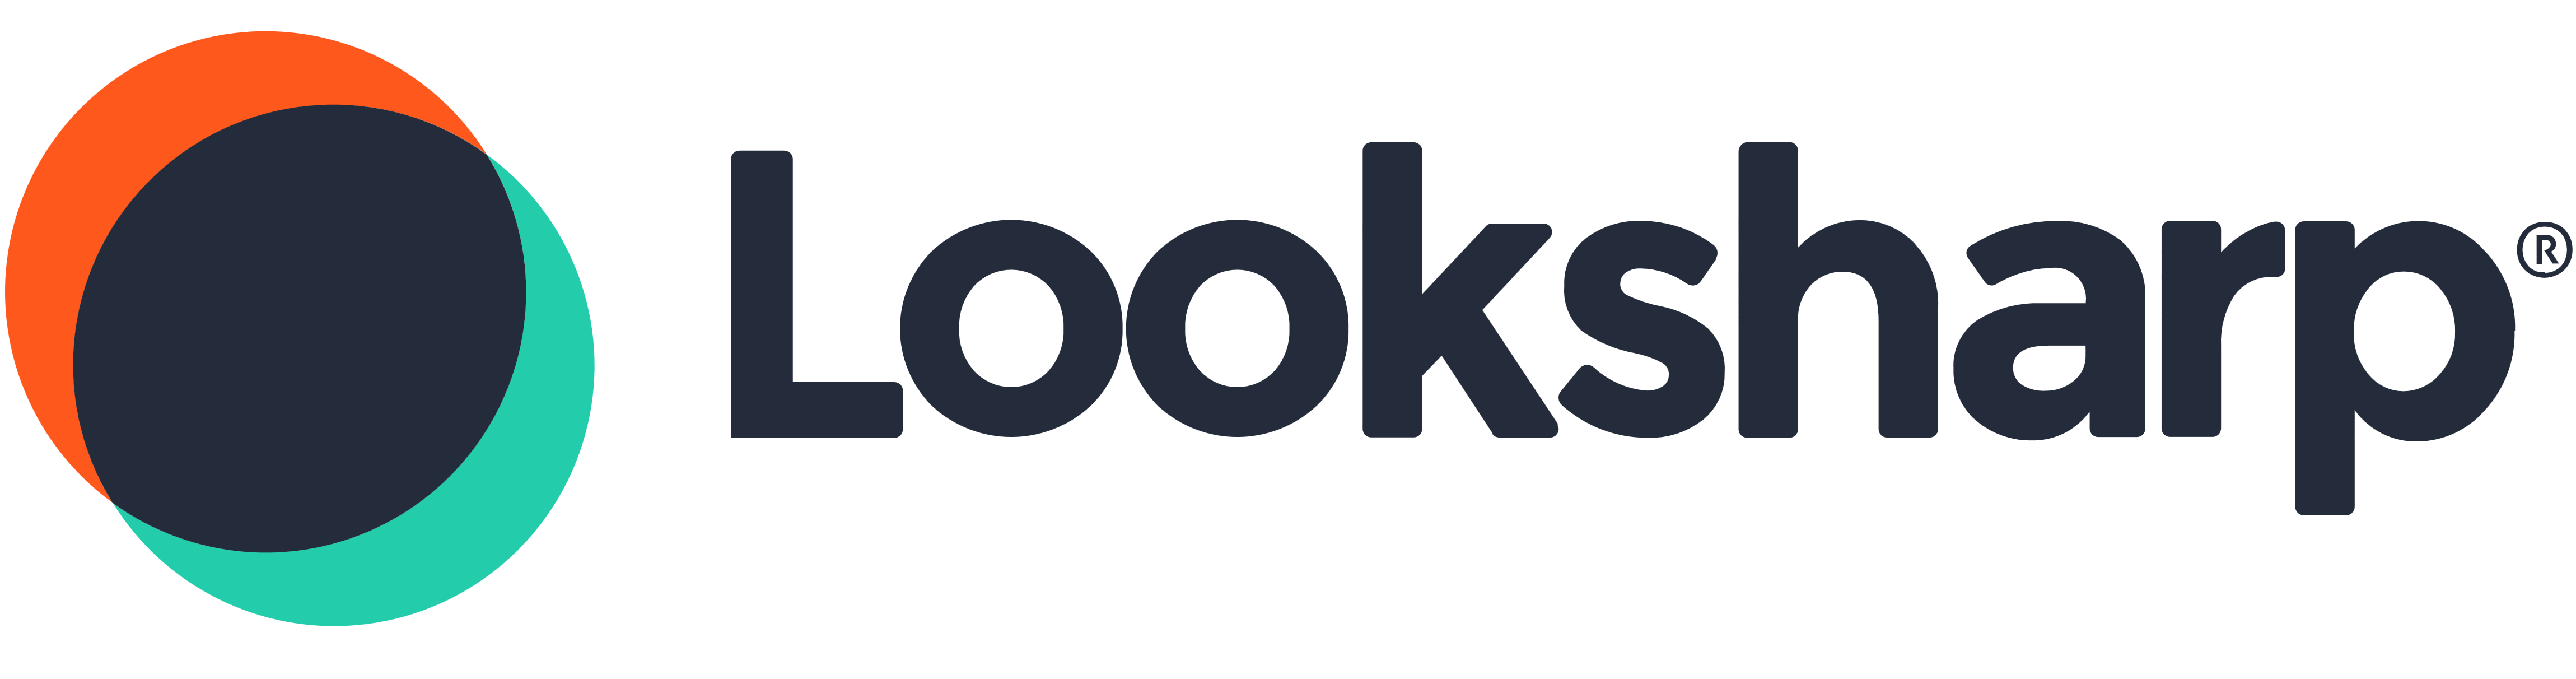 Looksharp logo, logotype